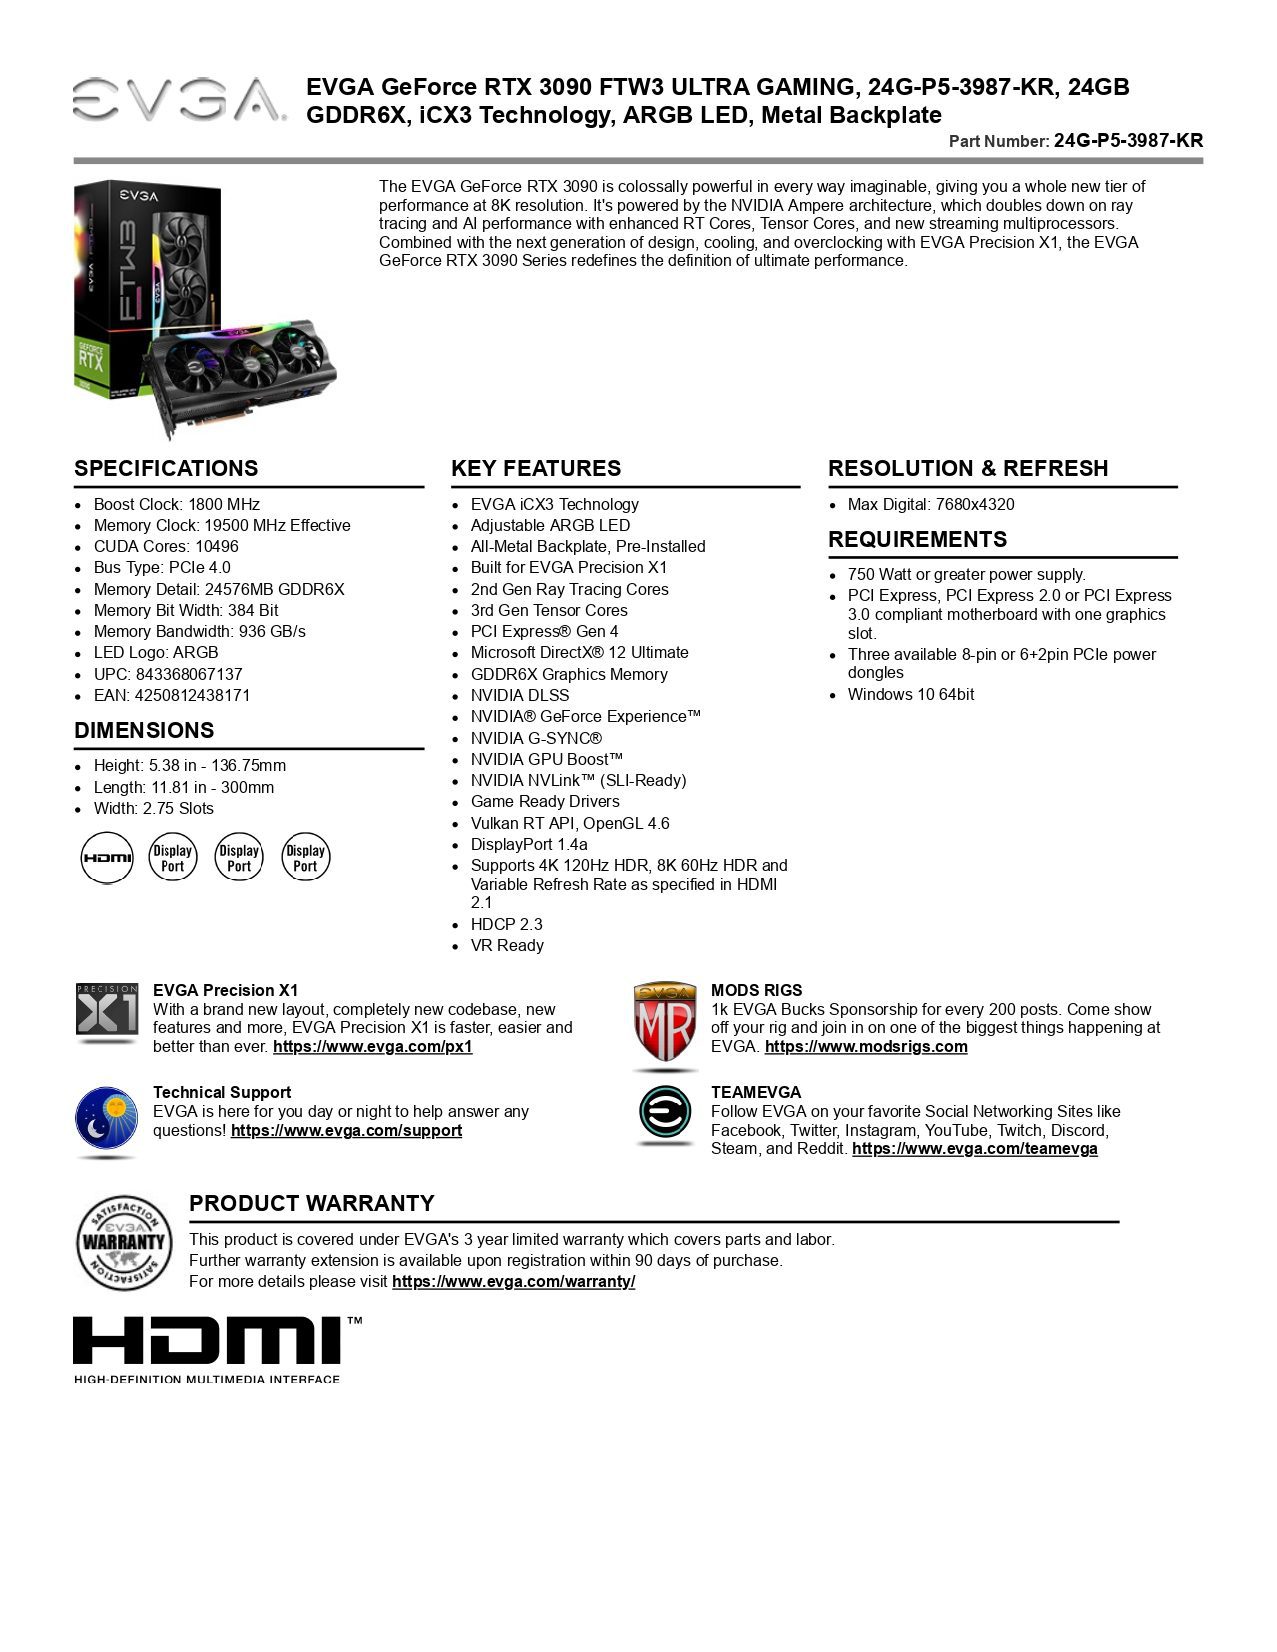 EVGA GeForce RTX 3090 FTW3 ULTRA GAMING Graphics Card (24G-P5-3987-KR)